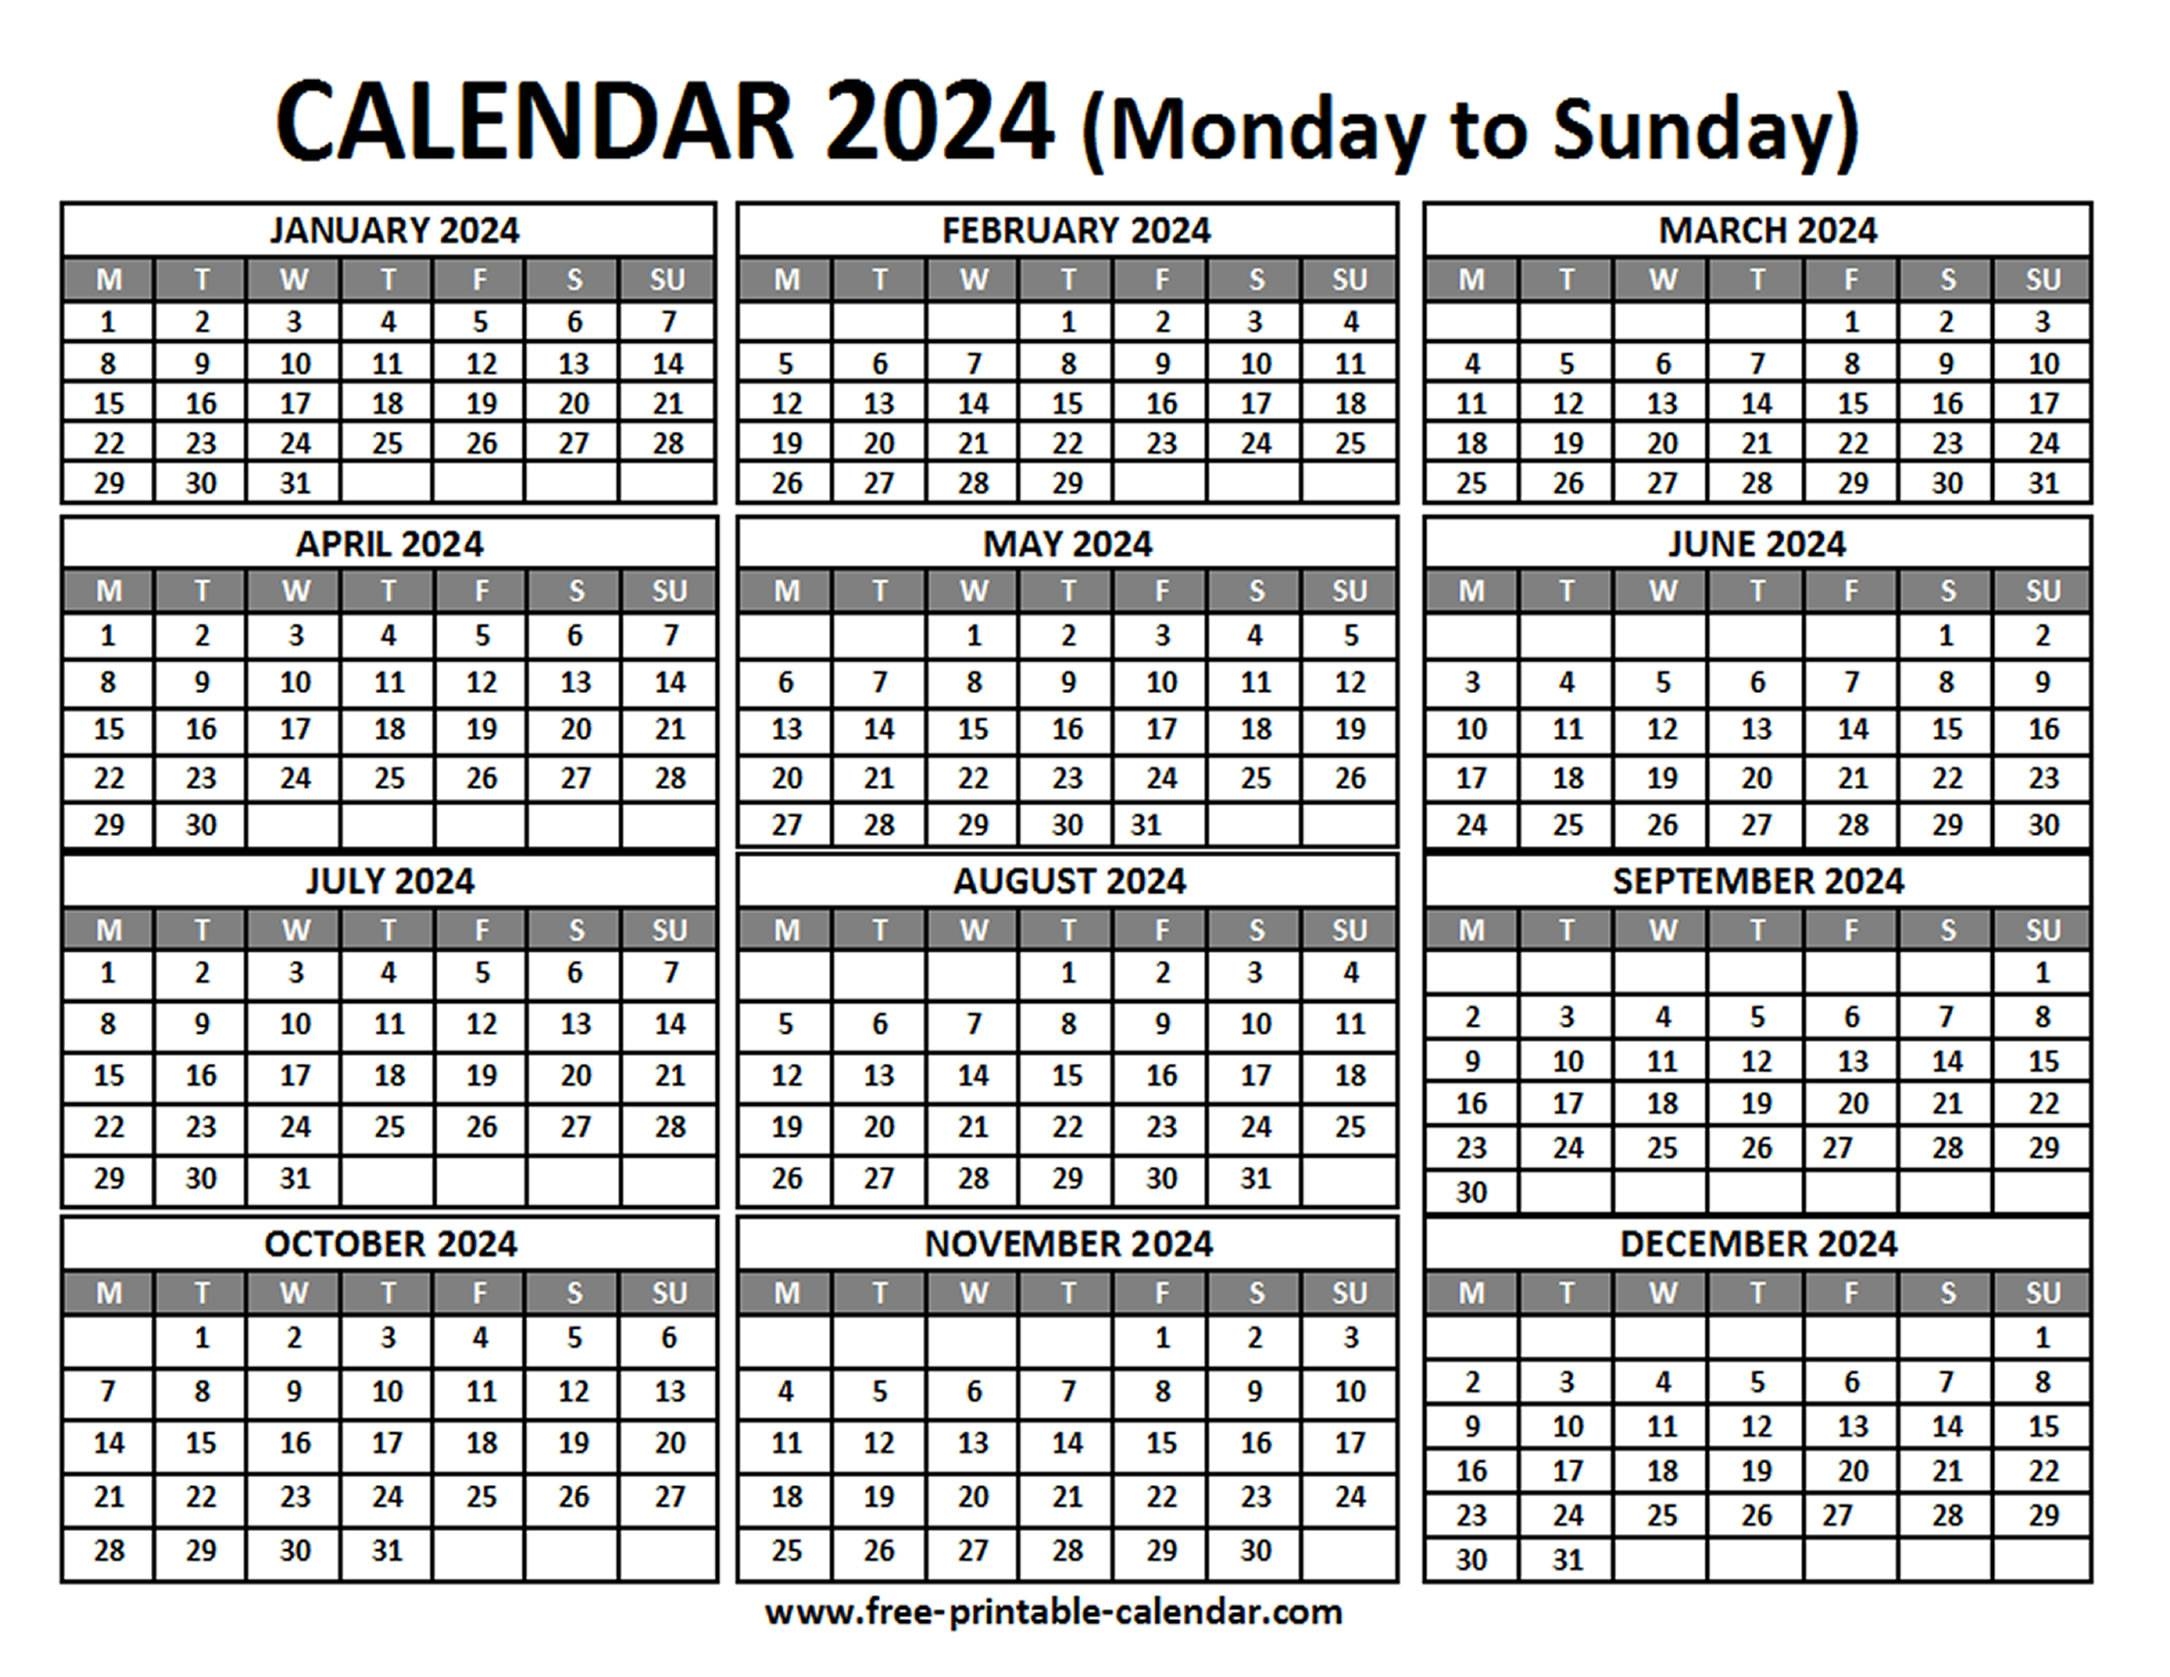 Free Printable 2024 Calendar within Free Printable Calendar 2024 Printfree